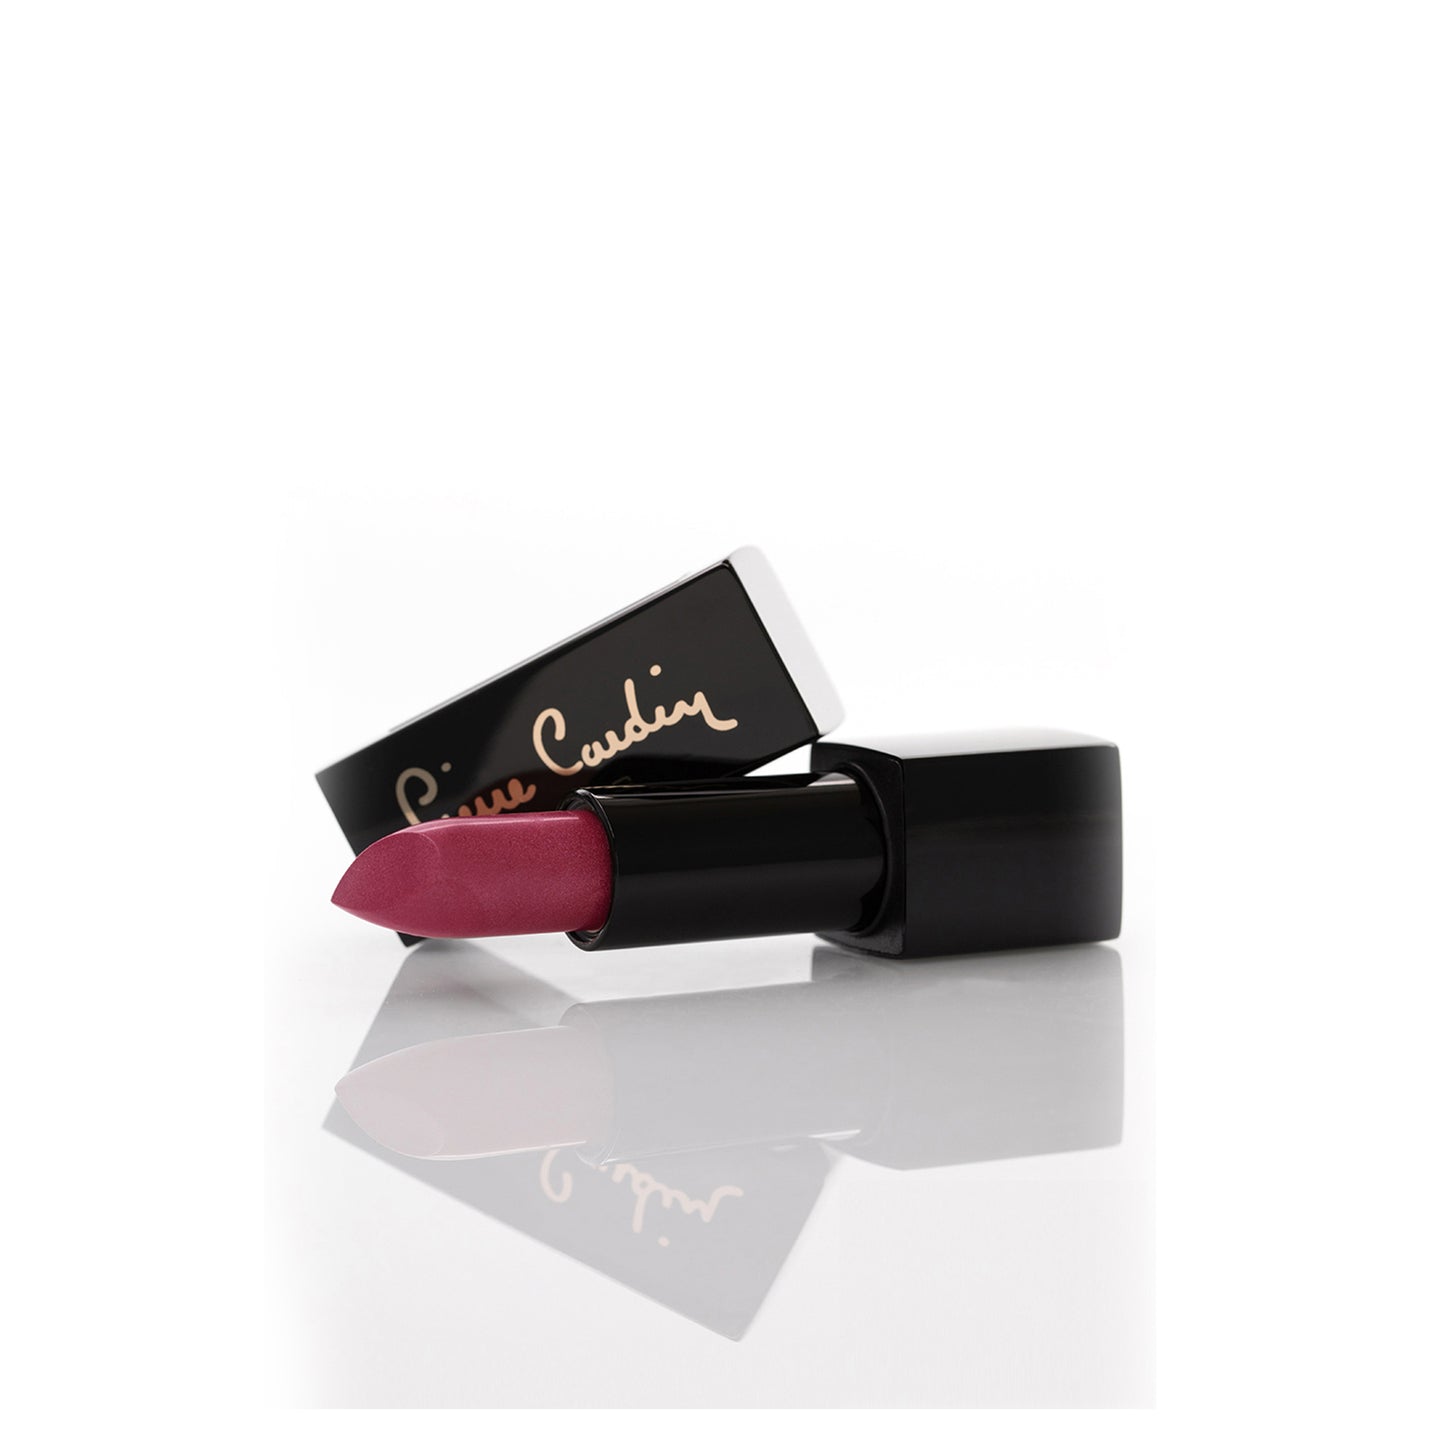 Pierre Cardin Mercury Velvet Lipstick  Fire Red 167 - 4 gr